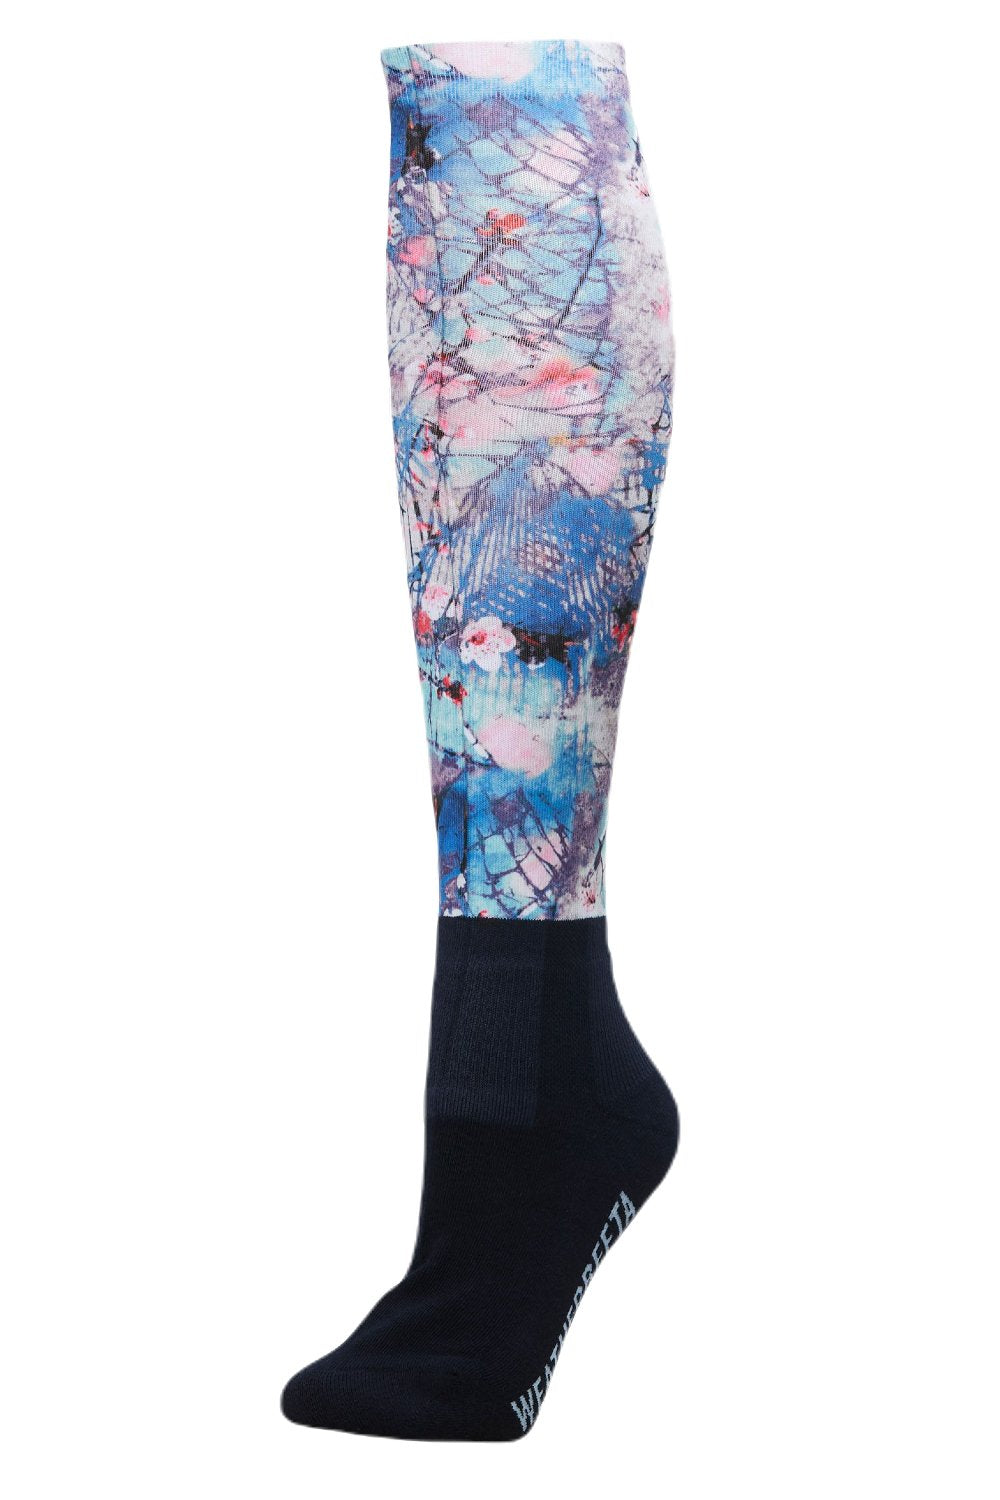 WeatherBeeta Stocking Socks In Blossom 